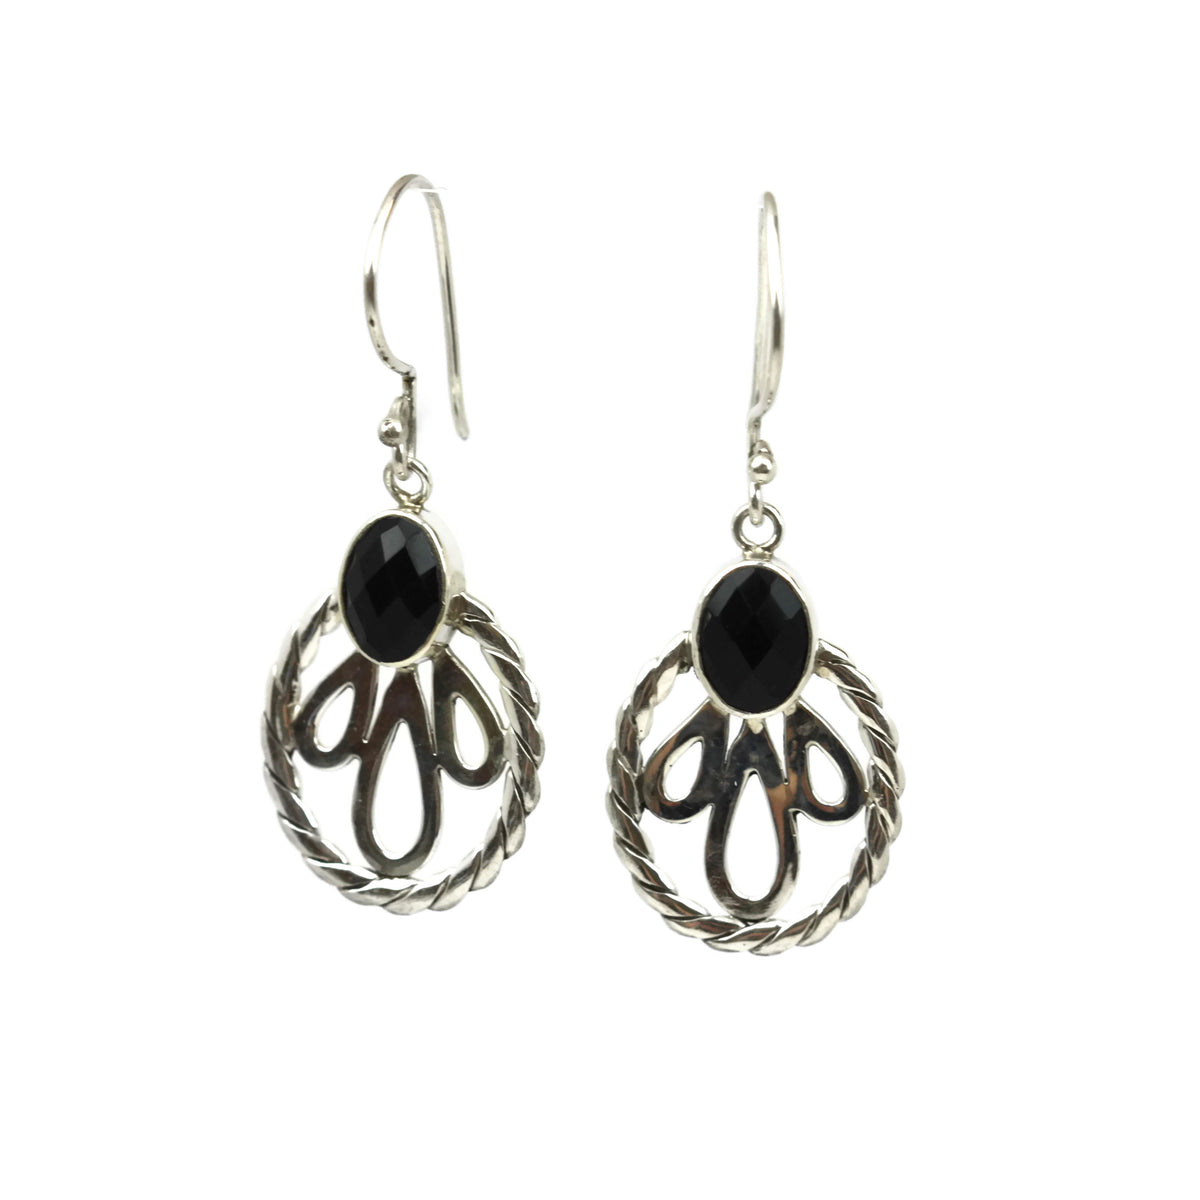 Handmade 925 Sterling Silver Black Onyx Gemstone Decorative Oval Earrings